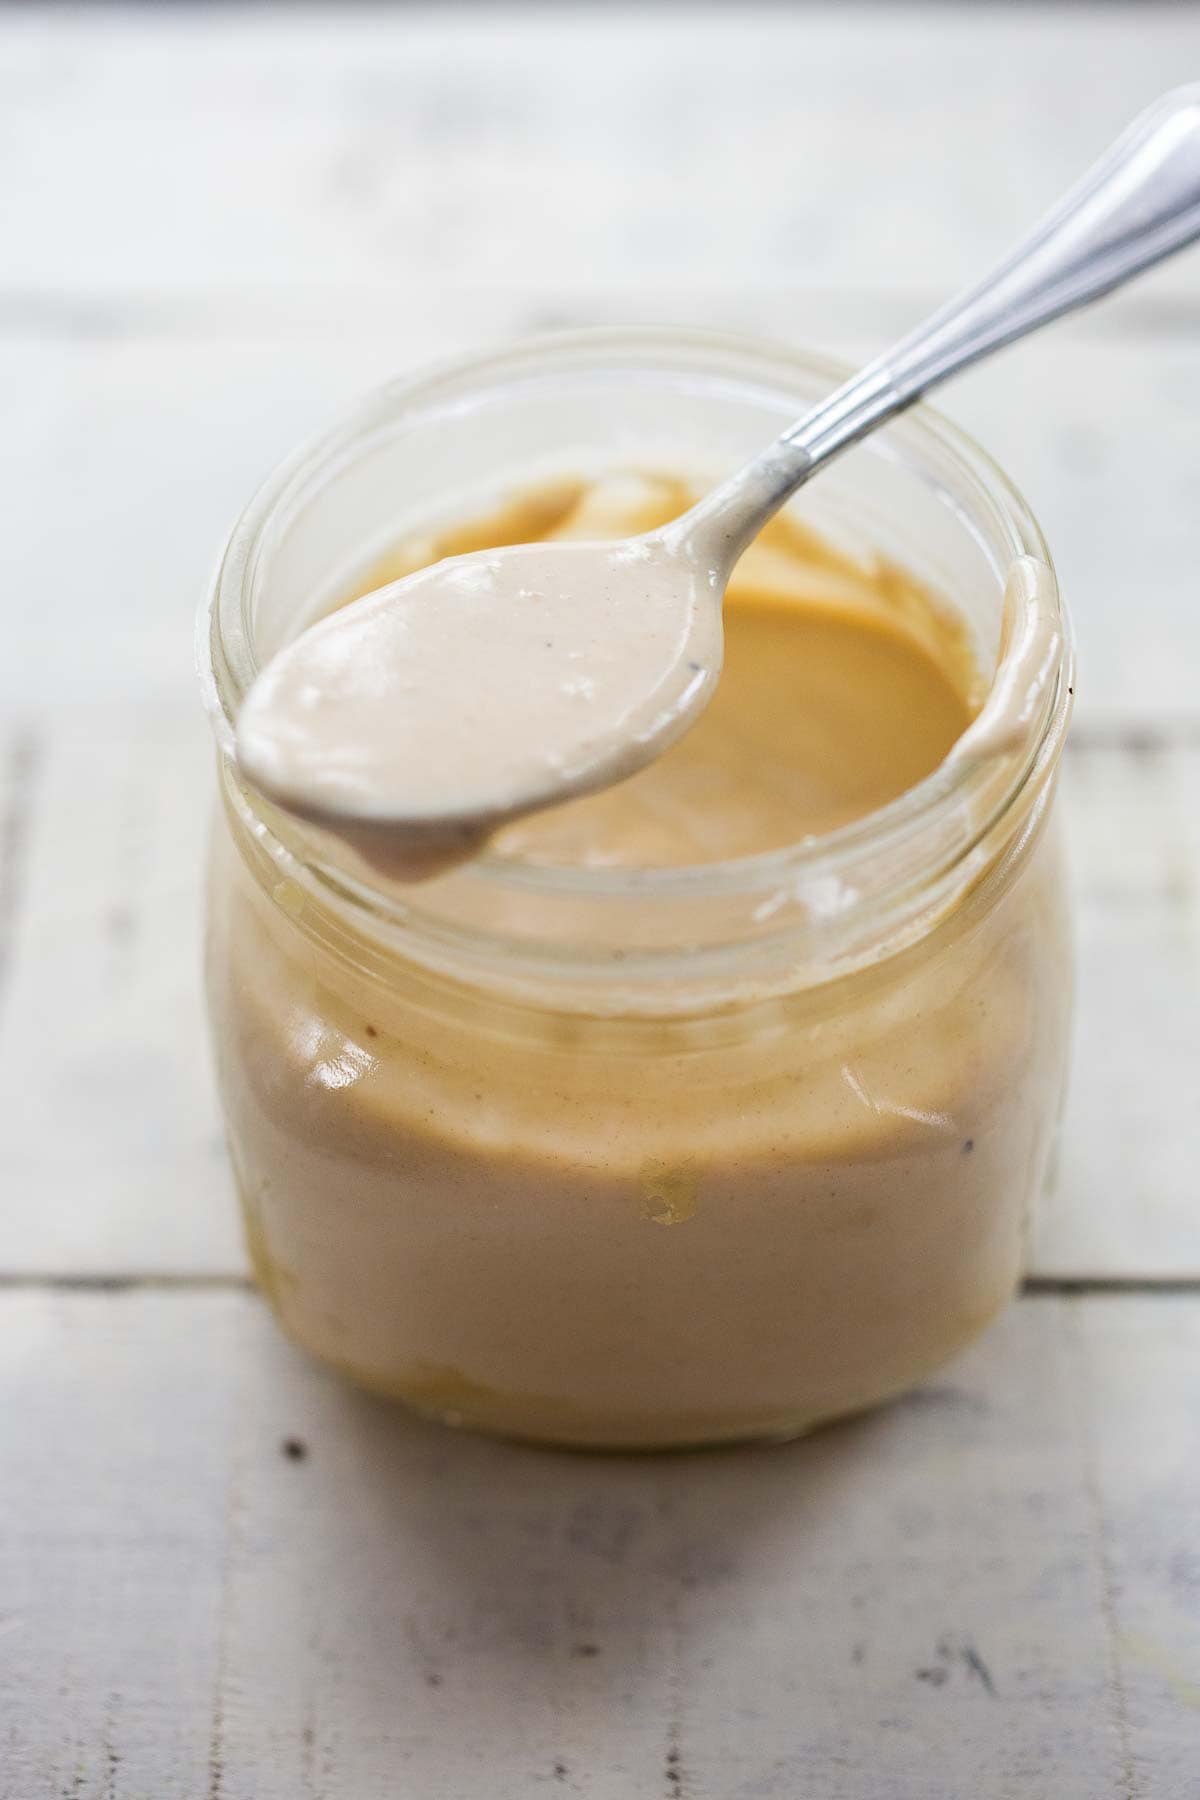 creamy tahini sauce in a jar with a spoon. 